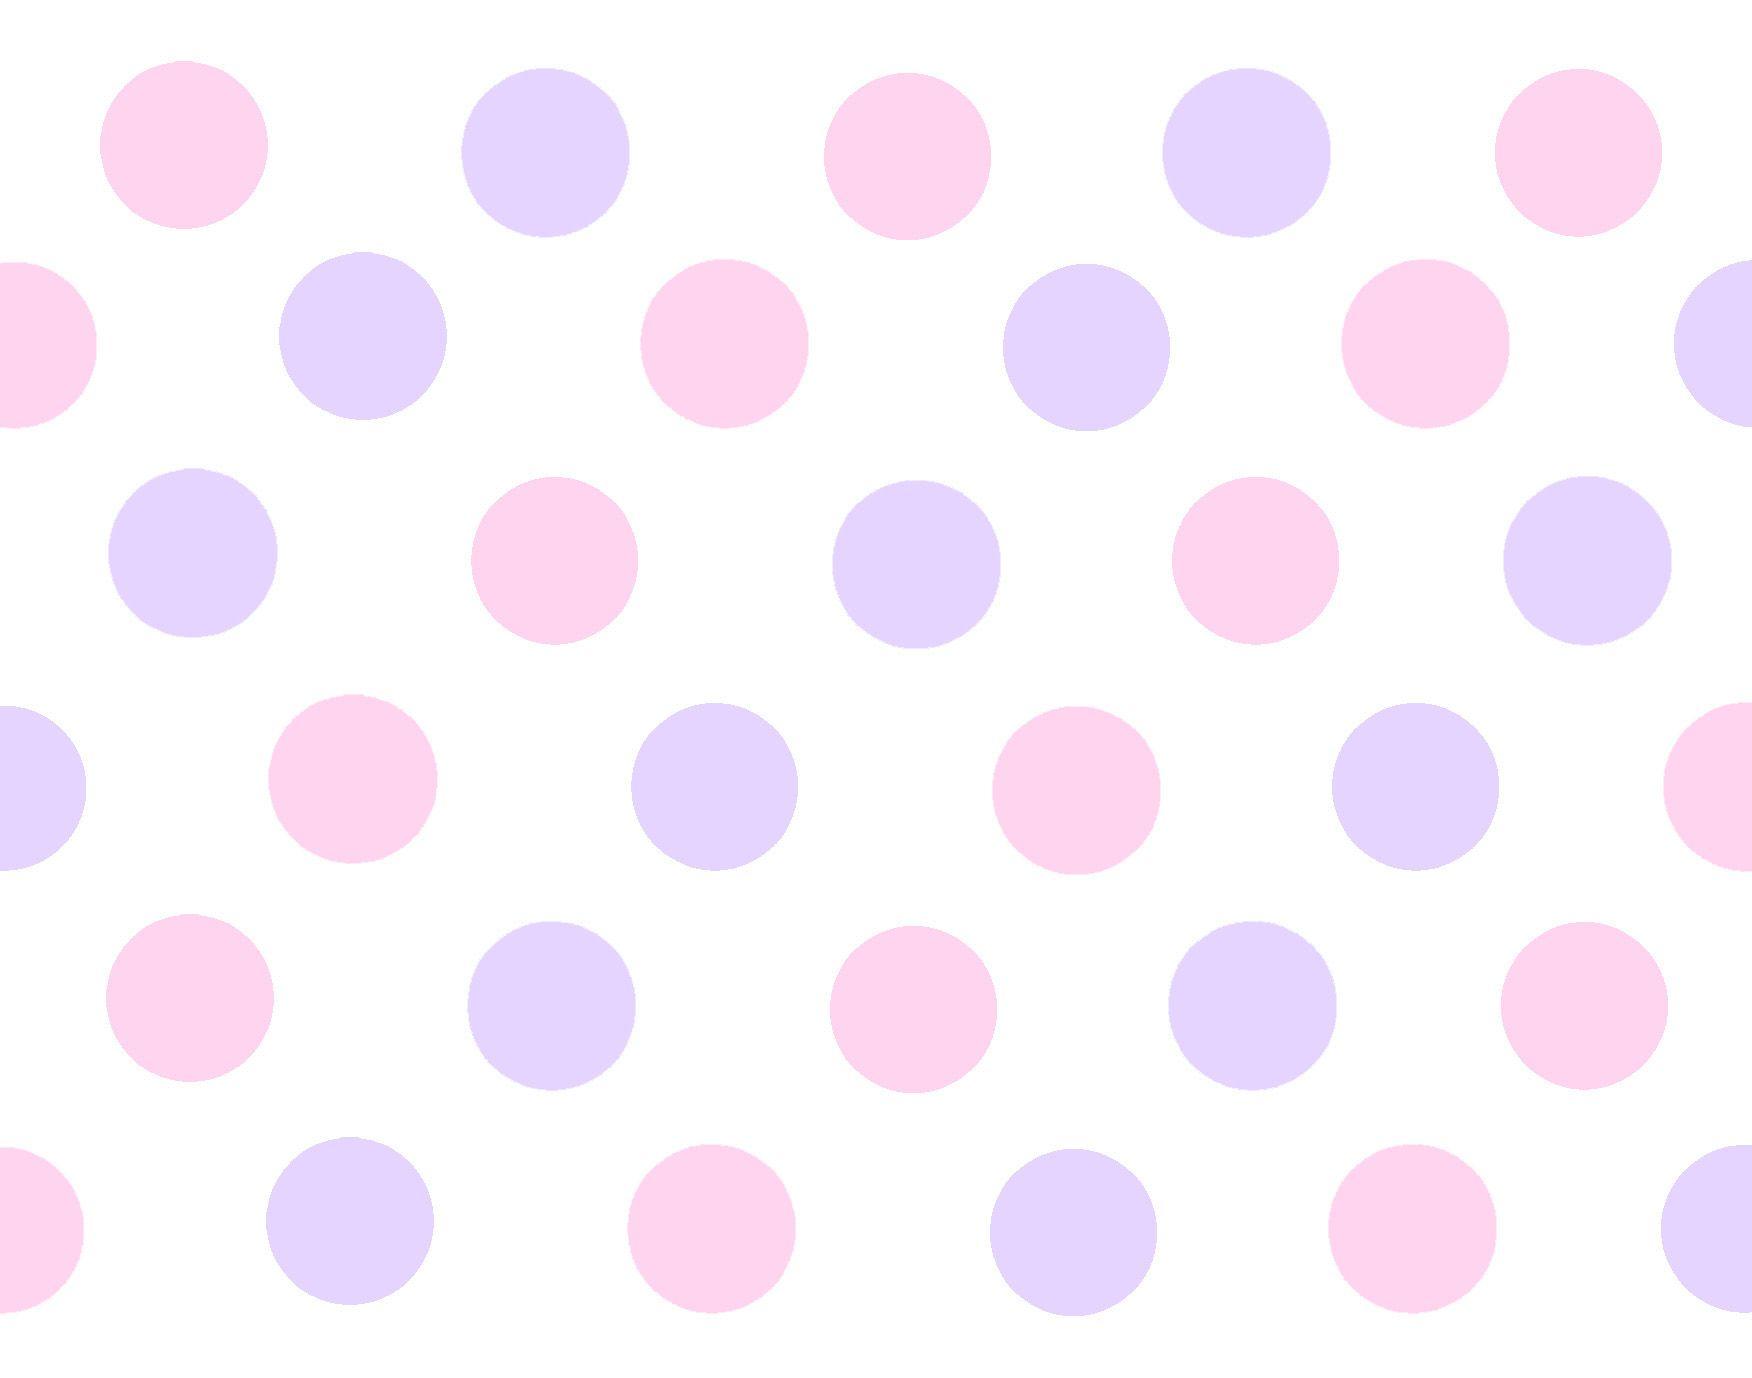 Pink And Purple Polka Dot Wallpaper